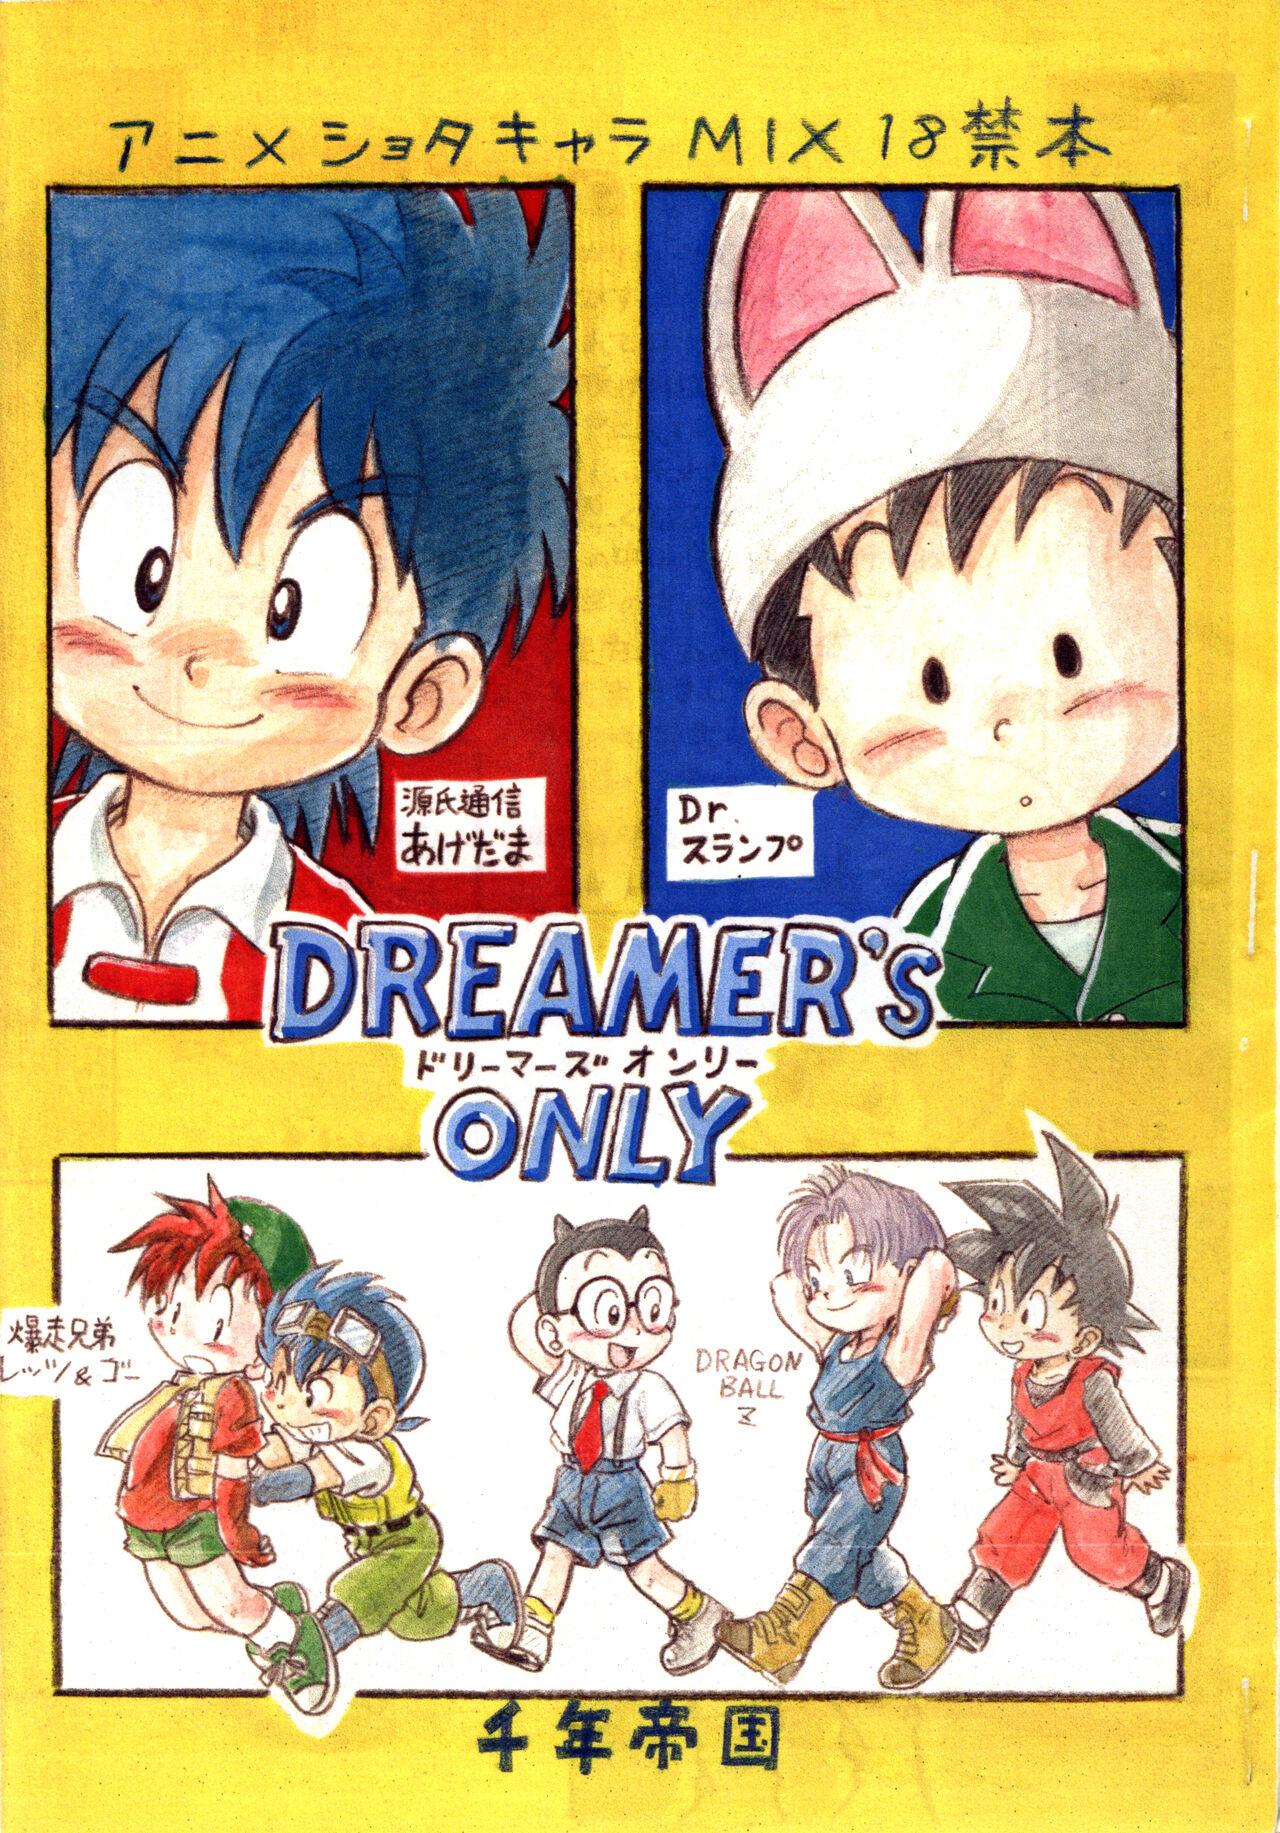 Edging DREAMER’S ONLY - Dragon ball z Bakusou kyoudai lets and go Dr. slump Genji tsuushin agedama White Girl - Page 1